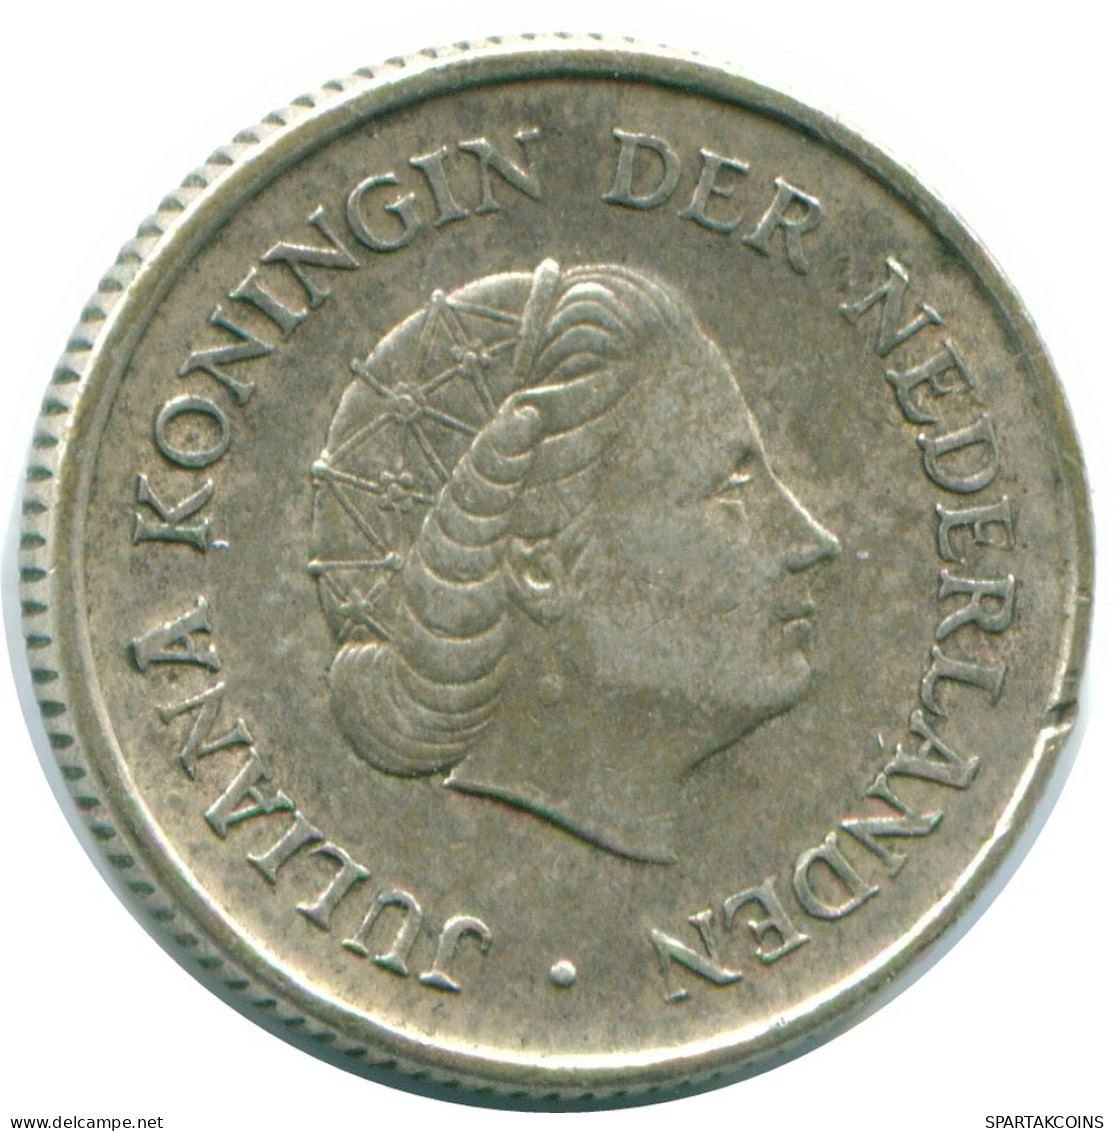 1/4 GULDEN 1965 NIEDERLÄNDISCHE ANTILLEN SILBER Koloniale Münze #NL11386.4.D.A - Netherlands Antilles